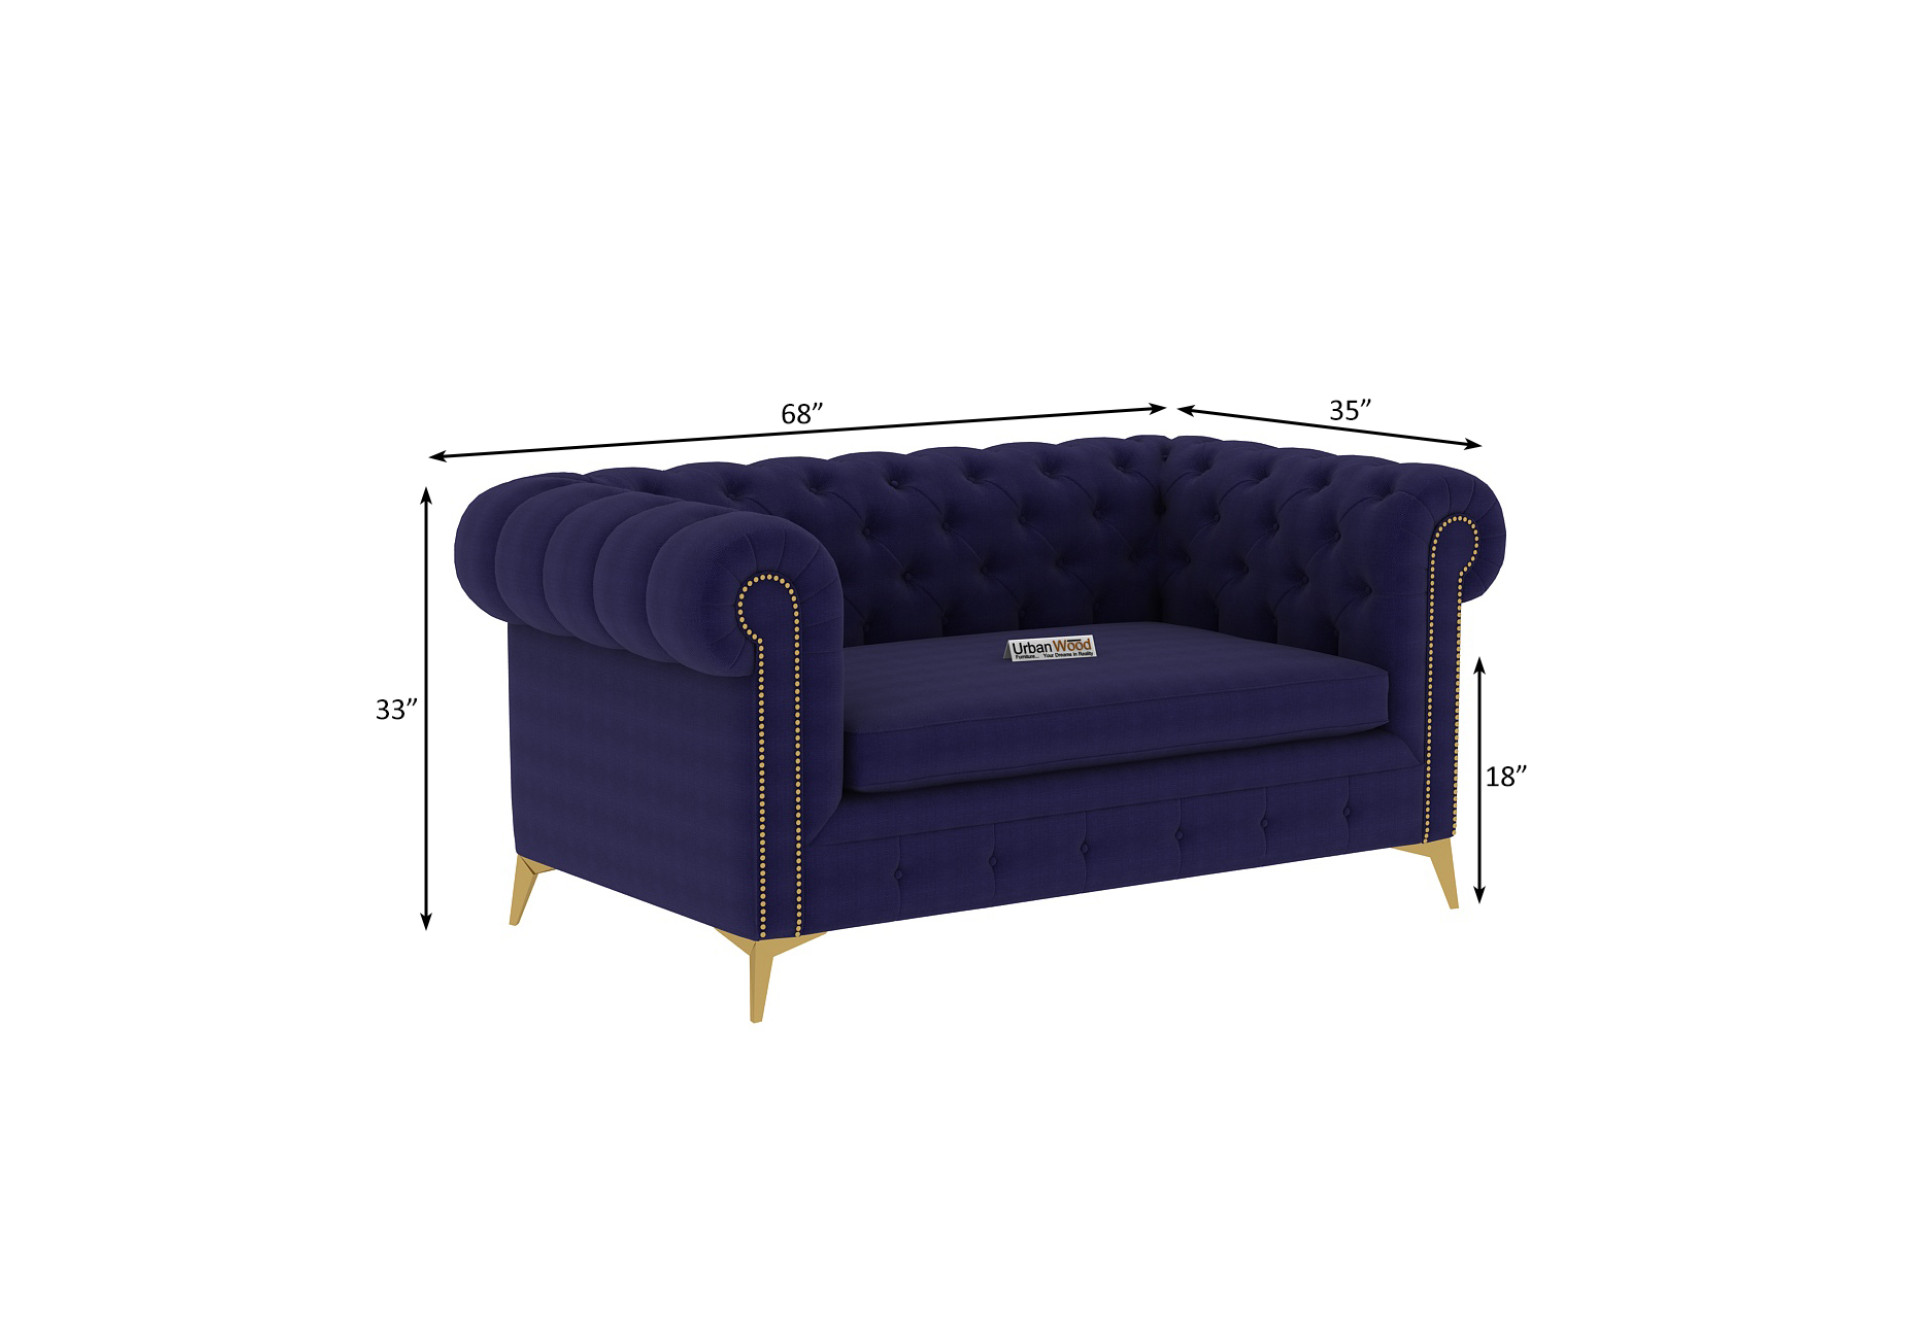 Regal 2+1+1 Seater Fabric Sofa (Cotton, Navy Blue)